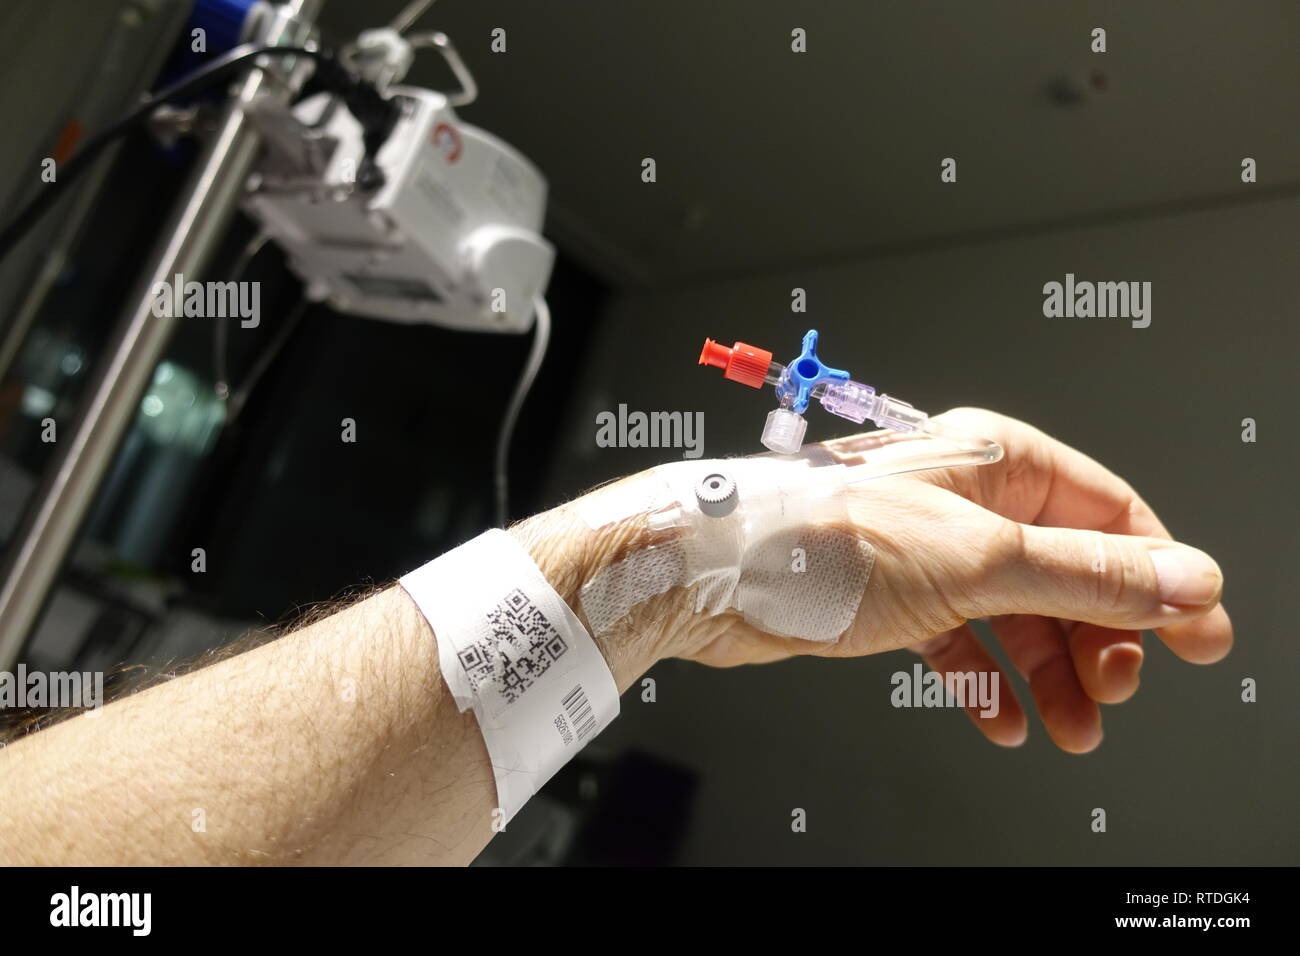 Artery catheterization on patient arm,Klinik Siloah,Hannover,Germany. Stock Photo